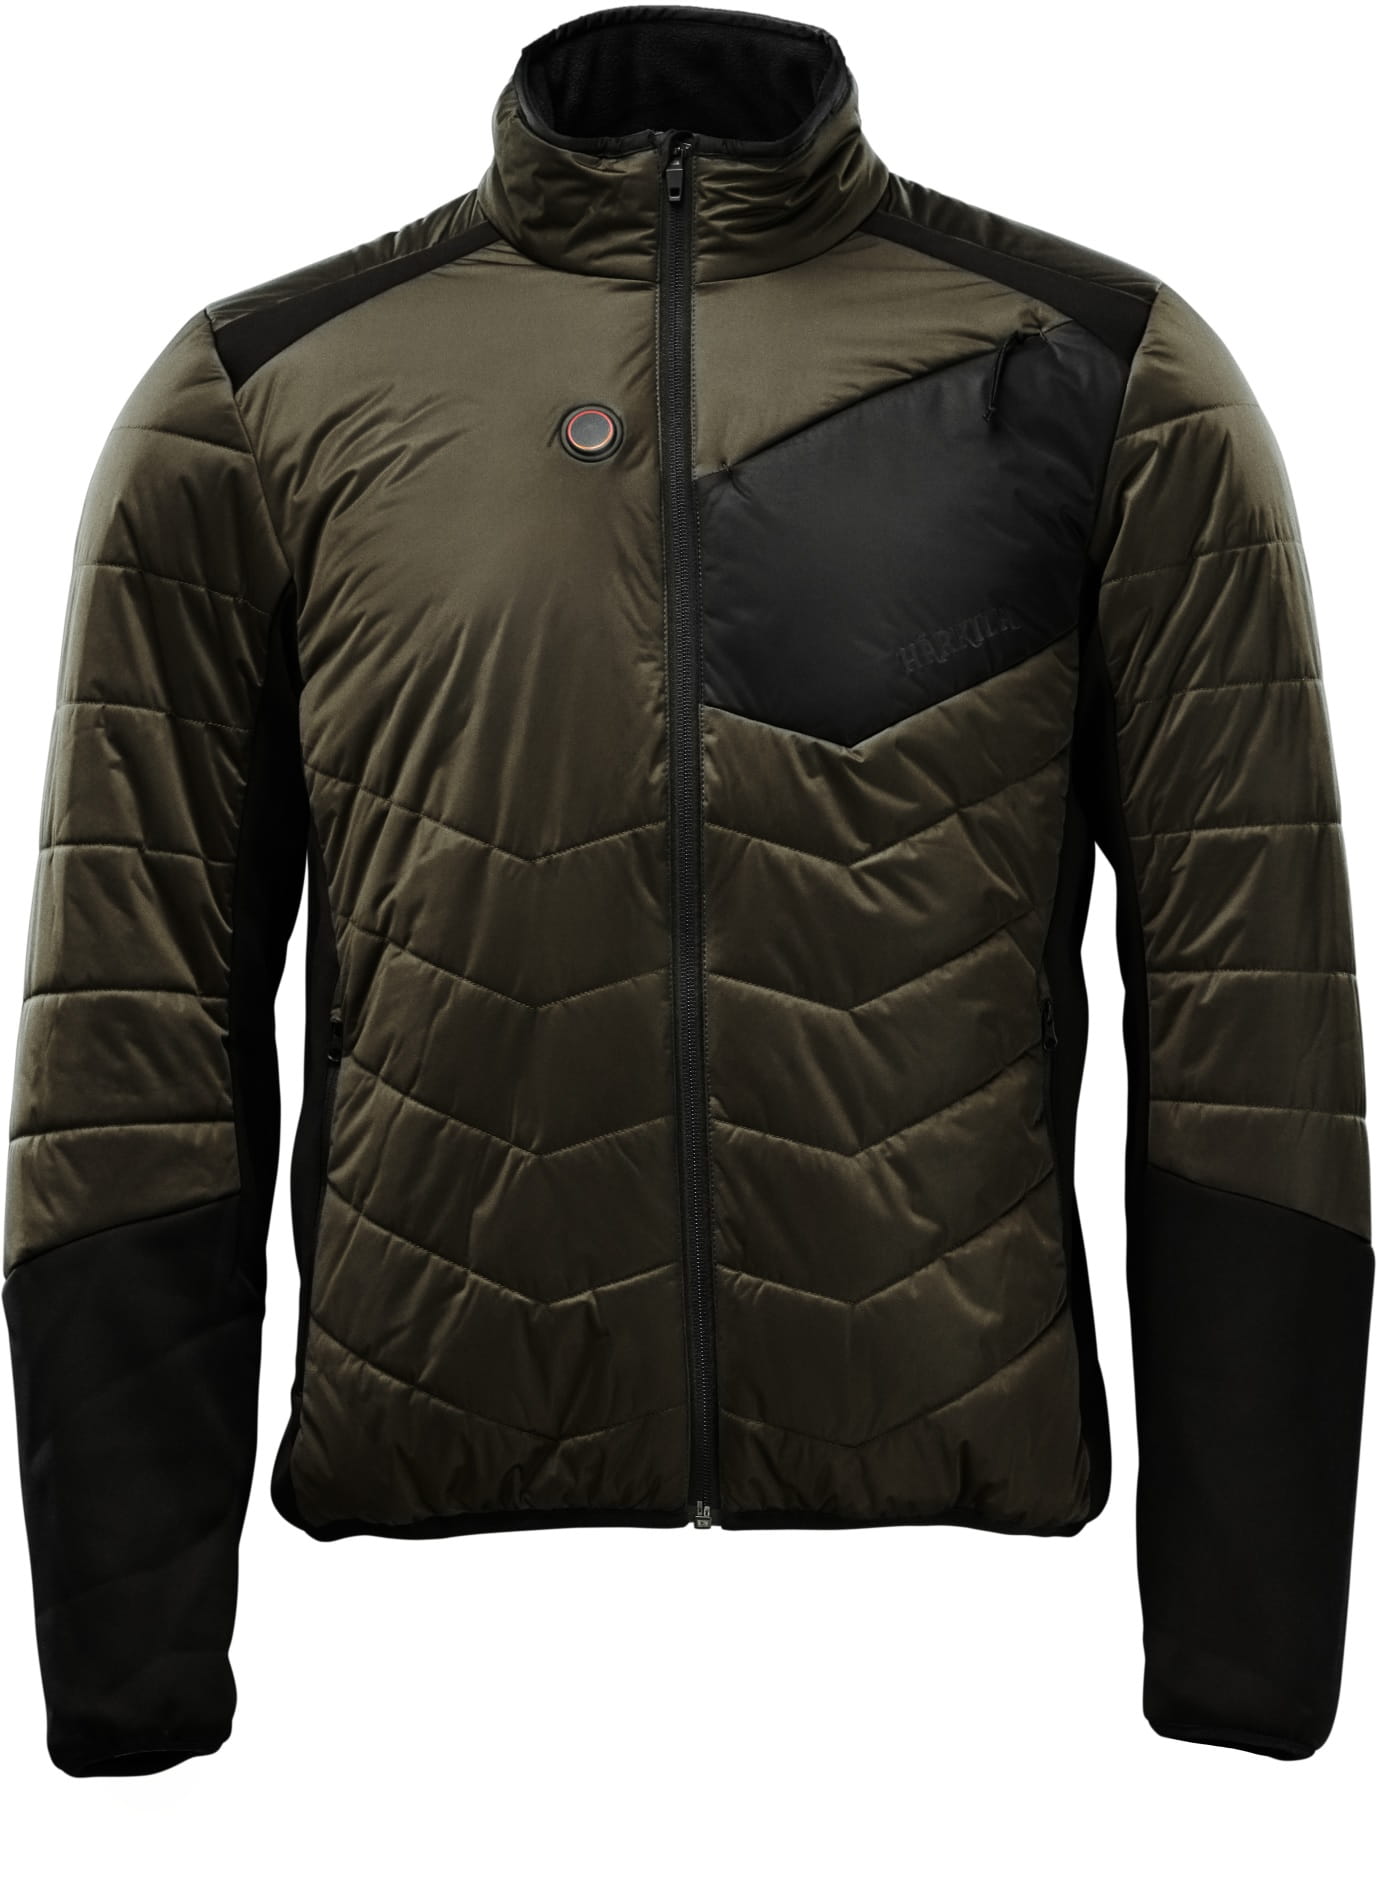 Manteau chauffant Alpine 2.0 - Homme||Alpine 2.0 Heated jacket - Men's